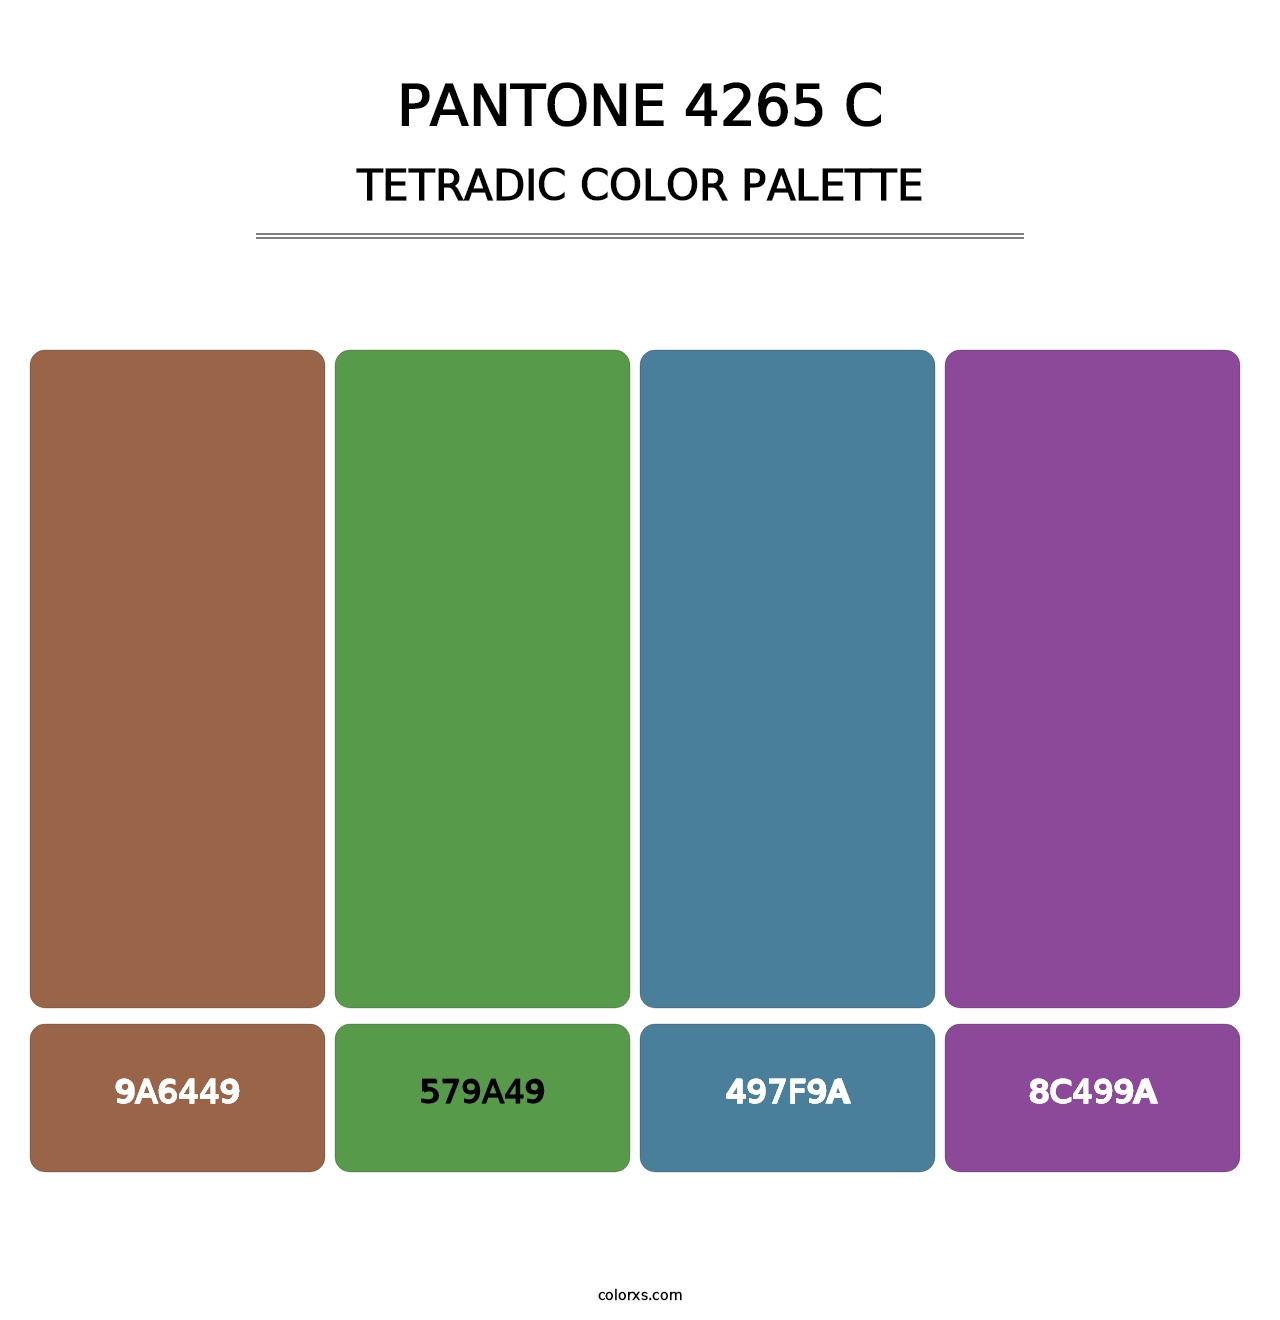 PANTONE 4265 C - Tetradic Color Palette